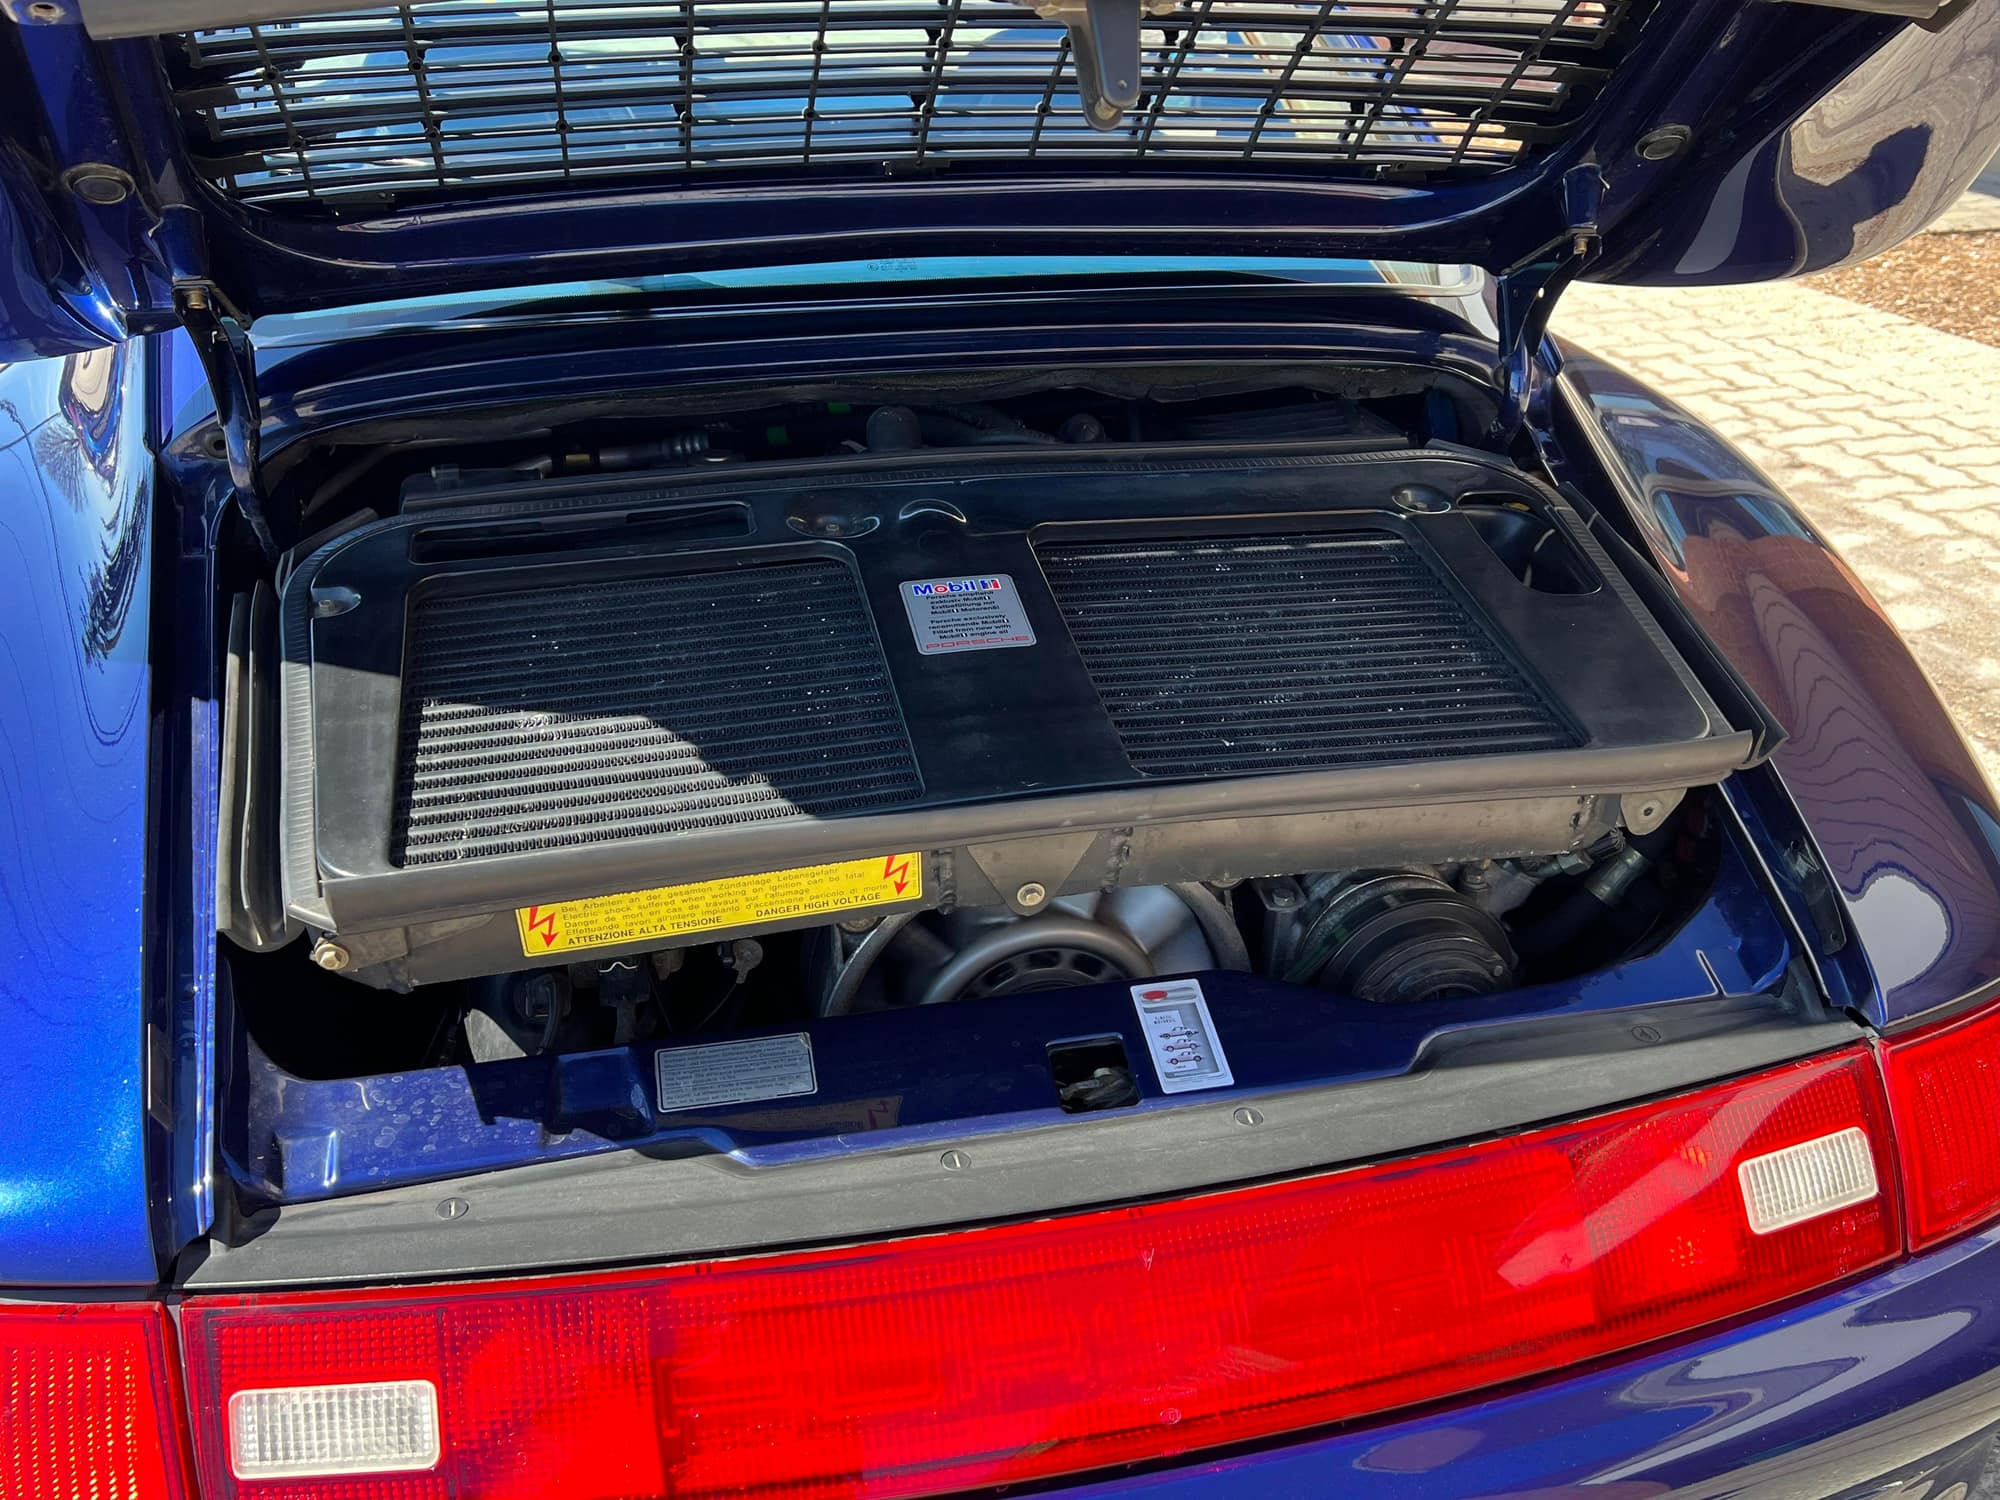 1996 Porsche 911 - 1996 Porsche 993 Turbo - 43k miles, X50 Powerkit, Iris Blue - Used - VIN WP0ZZZ99ZTS372253 - 43,850 Miles - 6 cyl - AWD - Manual - Coupe - Blue - Detroit, MI 48236, United States